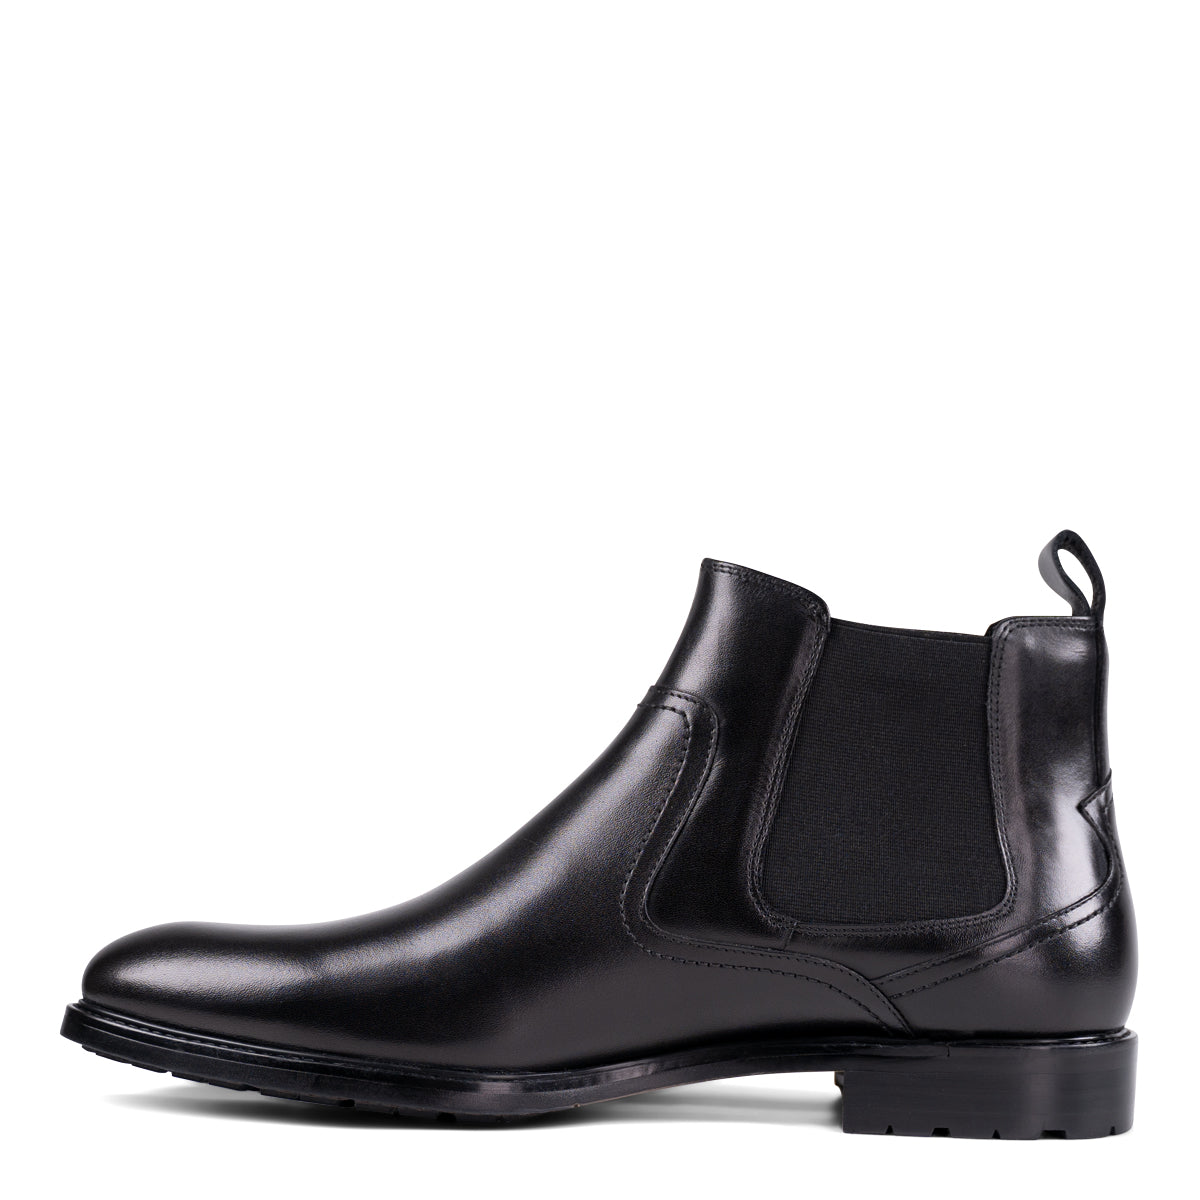 Garret Black Chelsea Boots